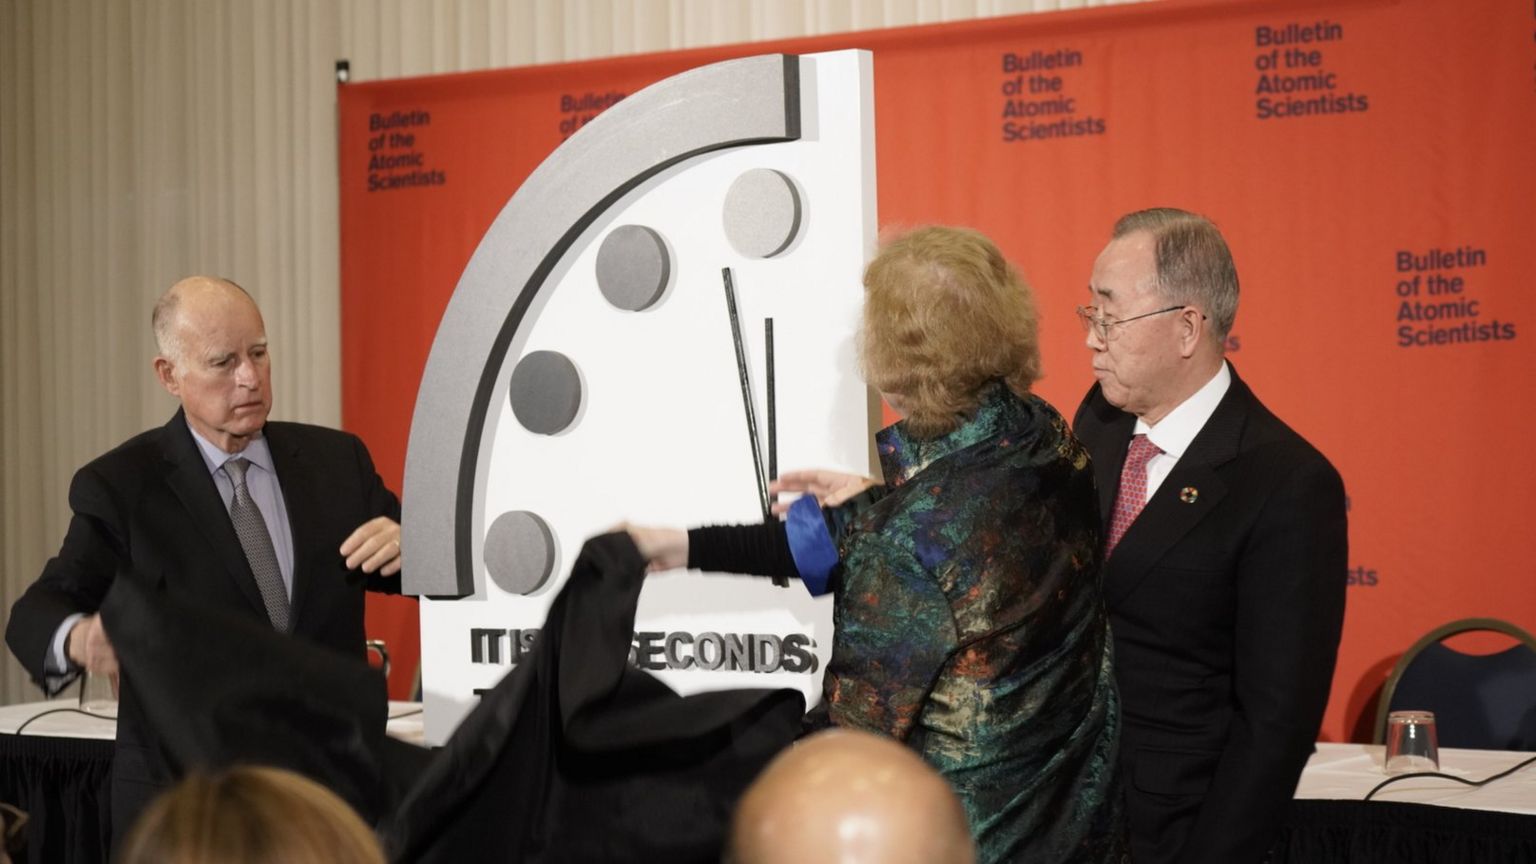 Doomsday clock signals highest ever peril level | us news